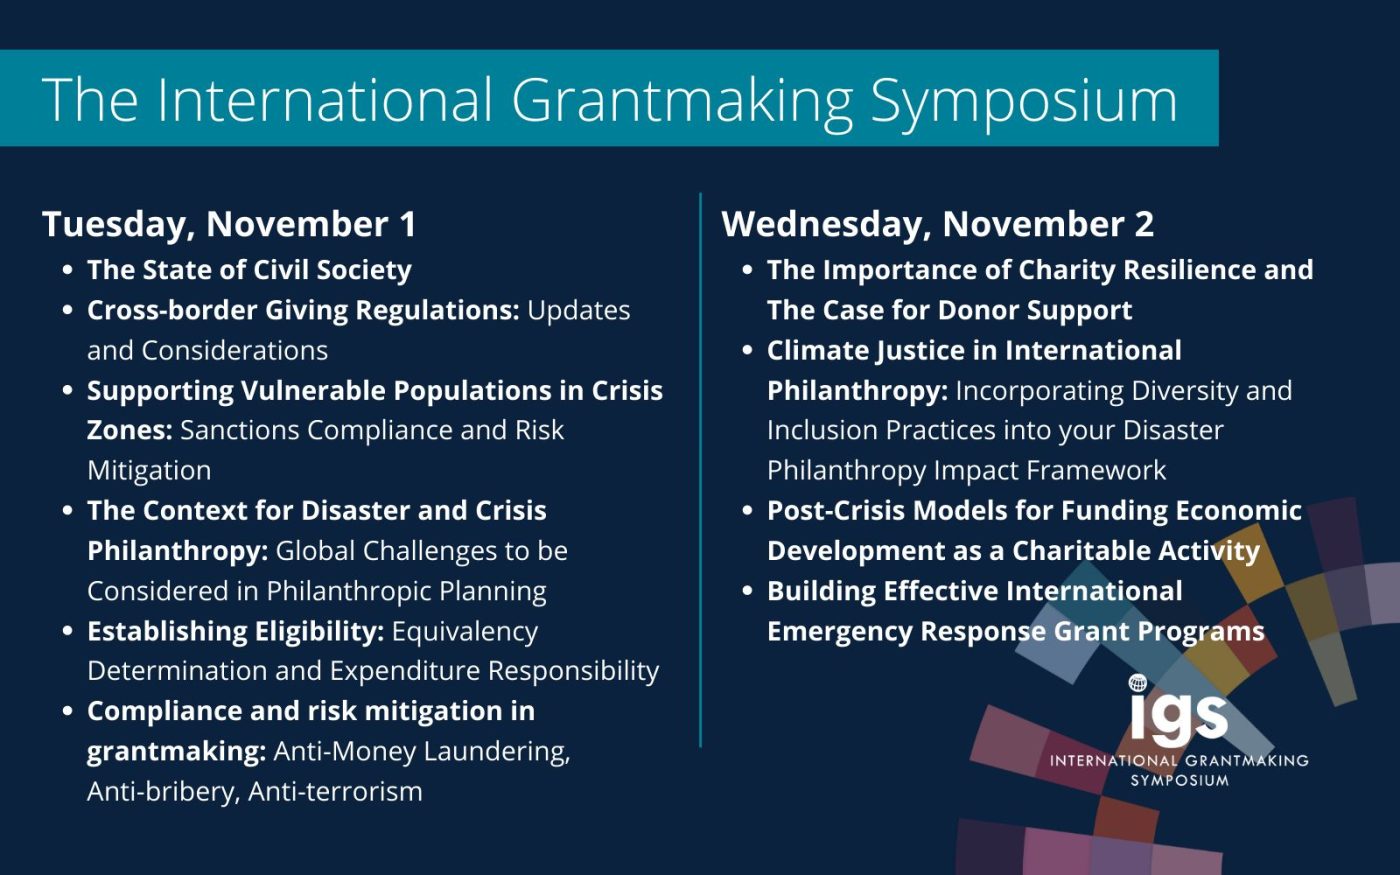 The International Grantmaking Symposium